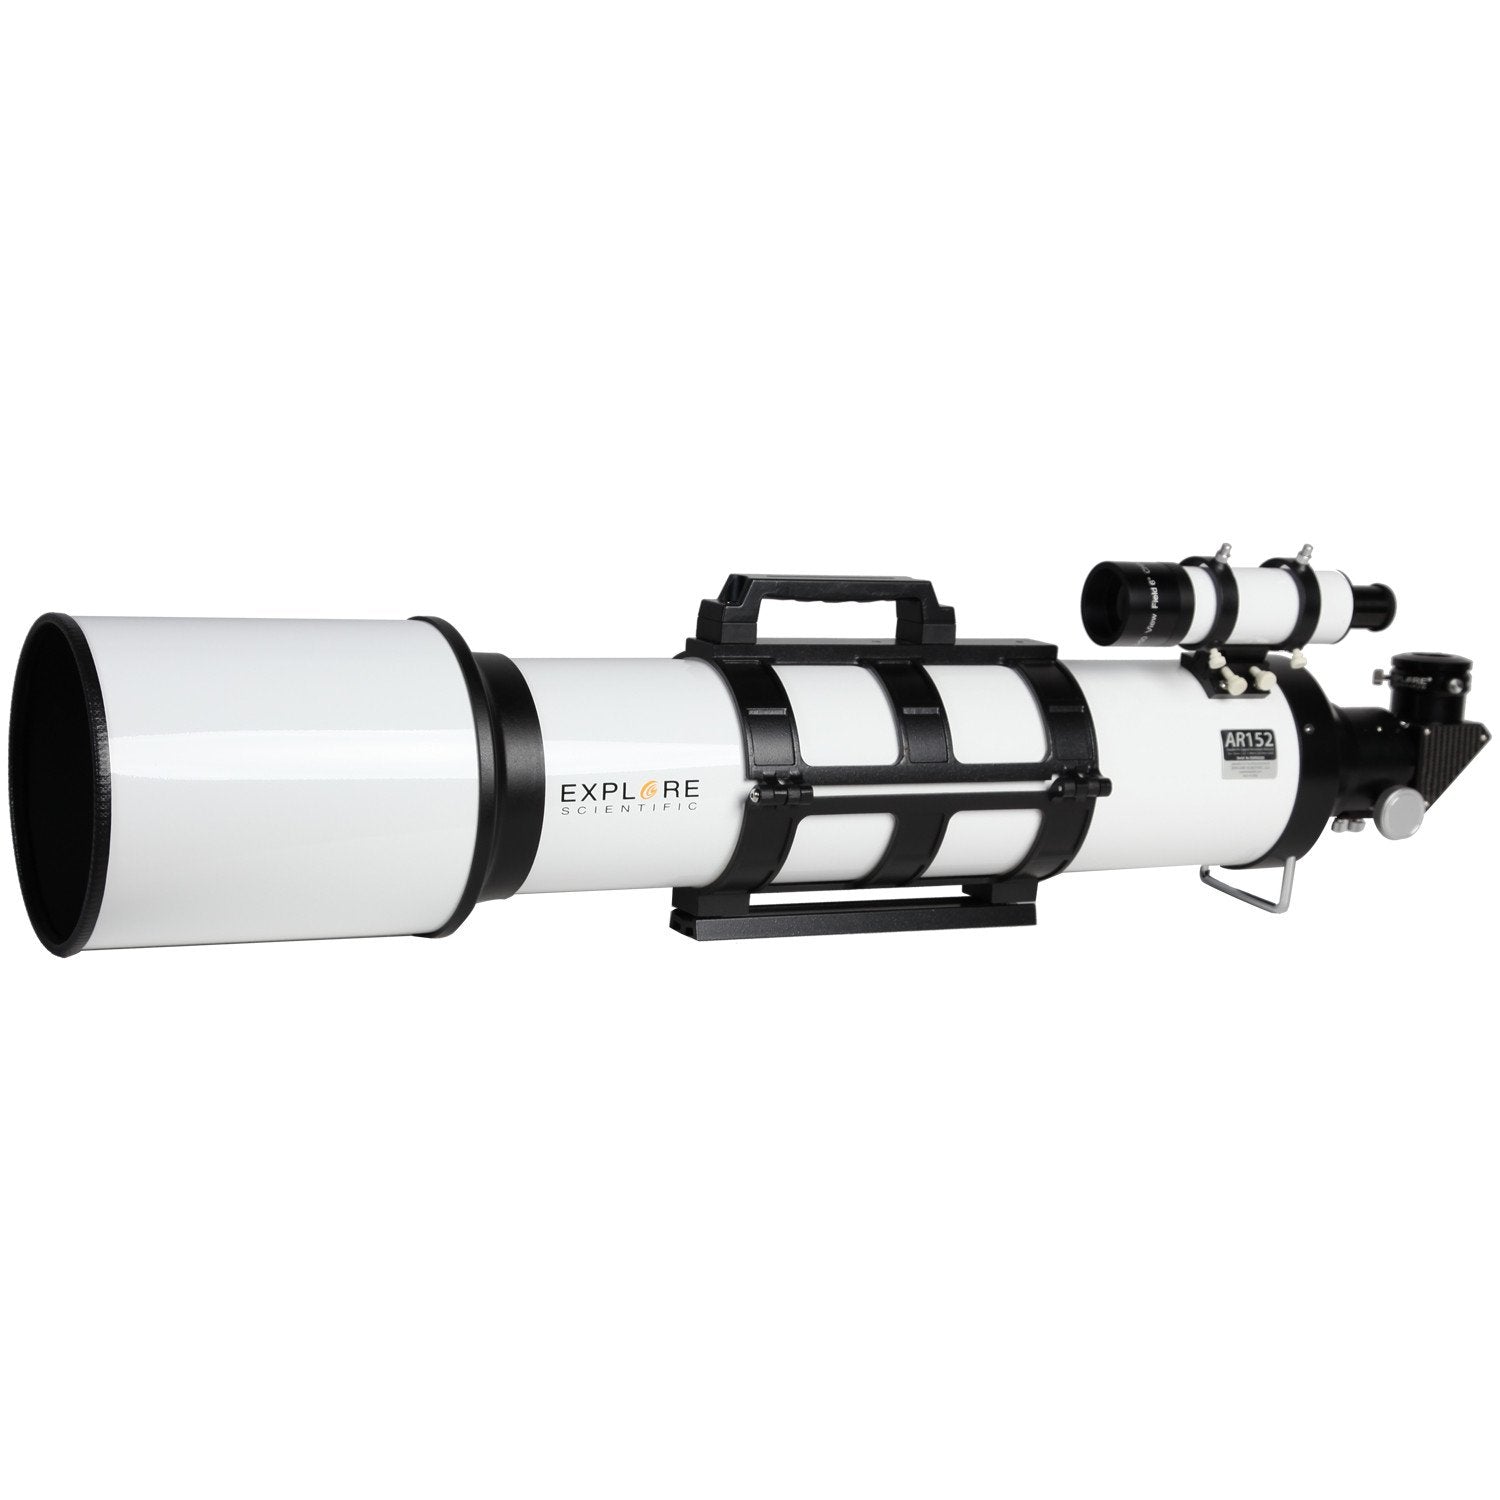 Explore Scientific AR152 Air-Spaced Doublet Refractor Telescope DAR152065-02 - CoreScientifics-Telescopes, Sport Optics & More